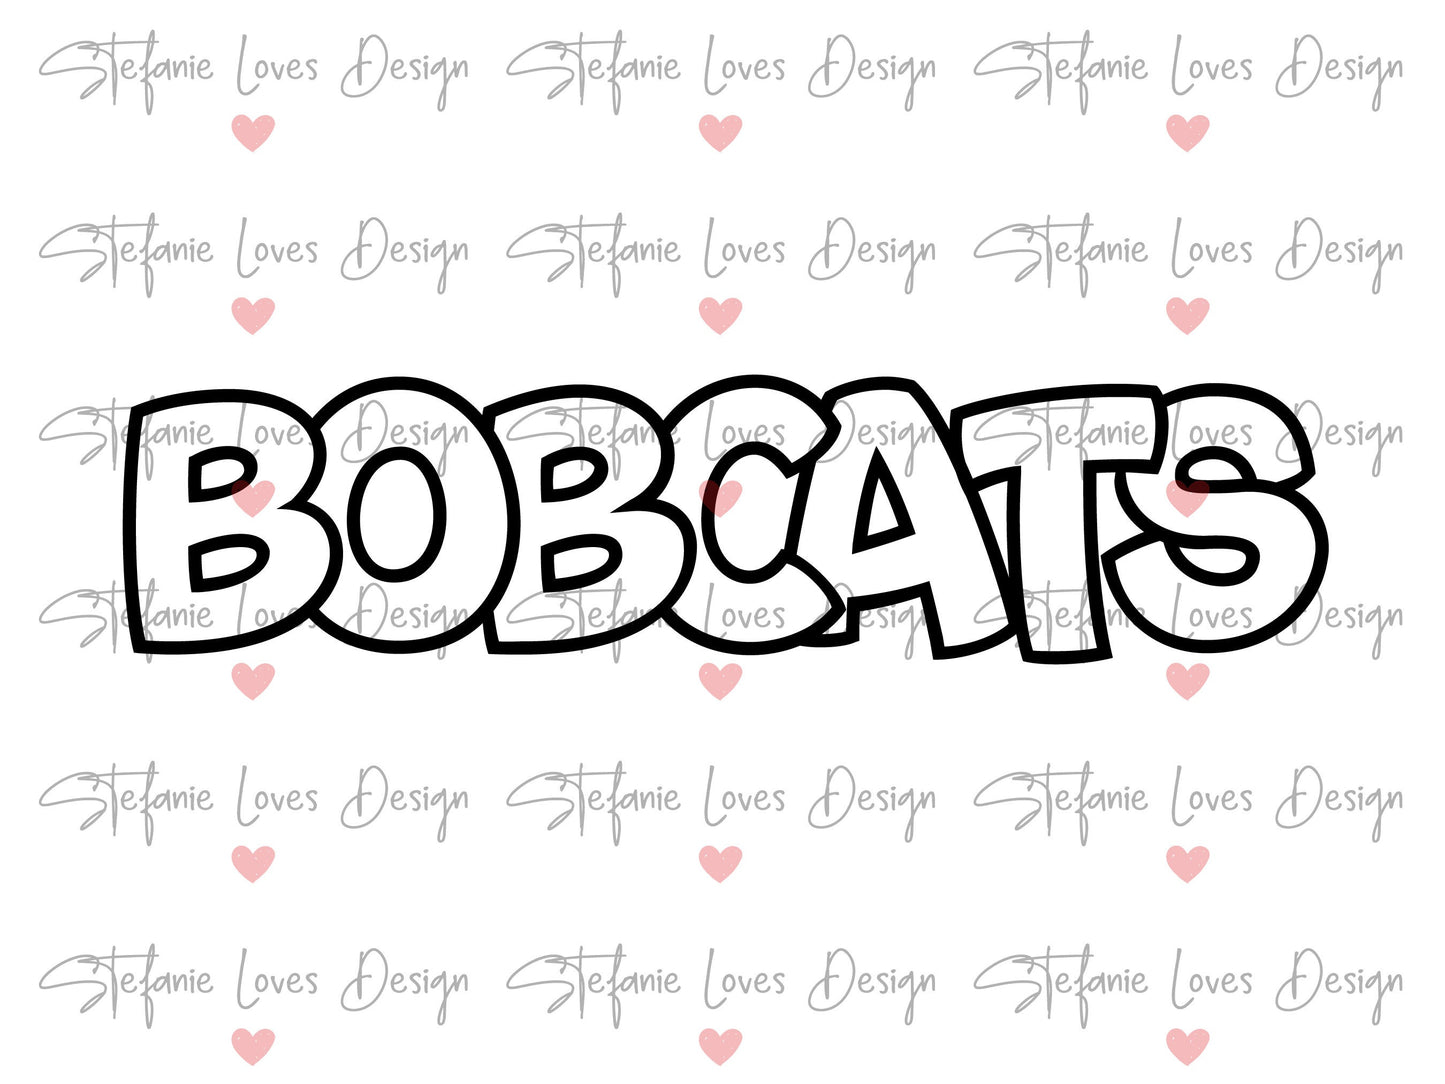 Bobcats svg, Bobcats Outline svg, Bobcats shirt svg, Digital Design, Bobcats Mascot